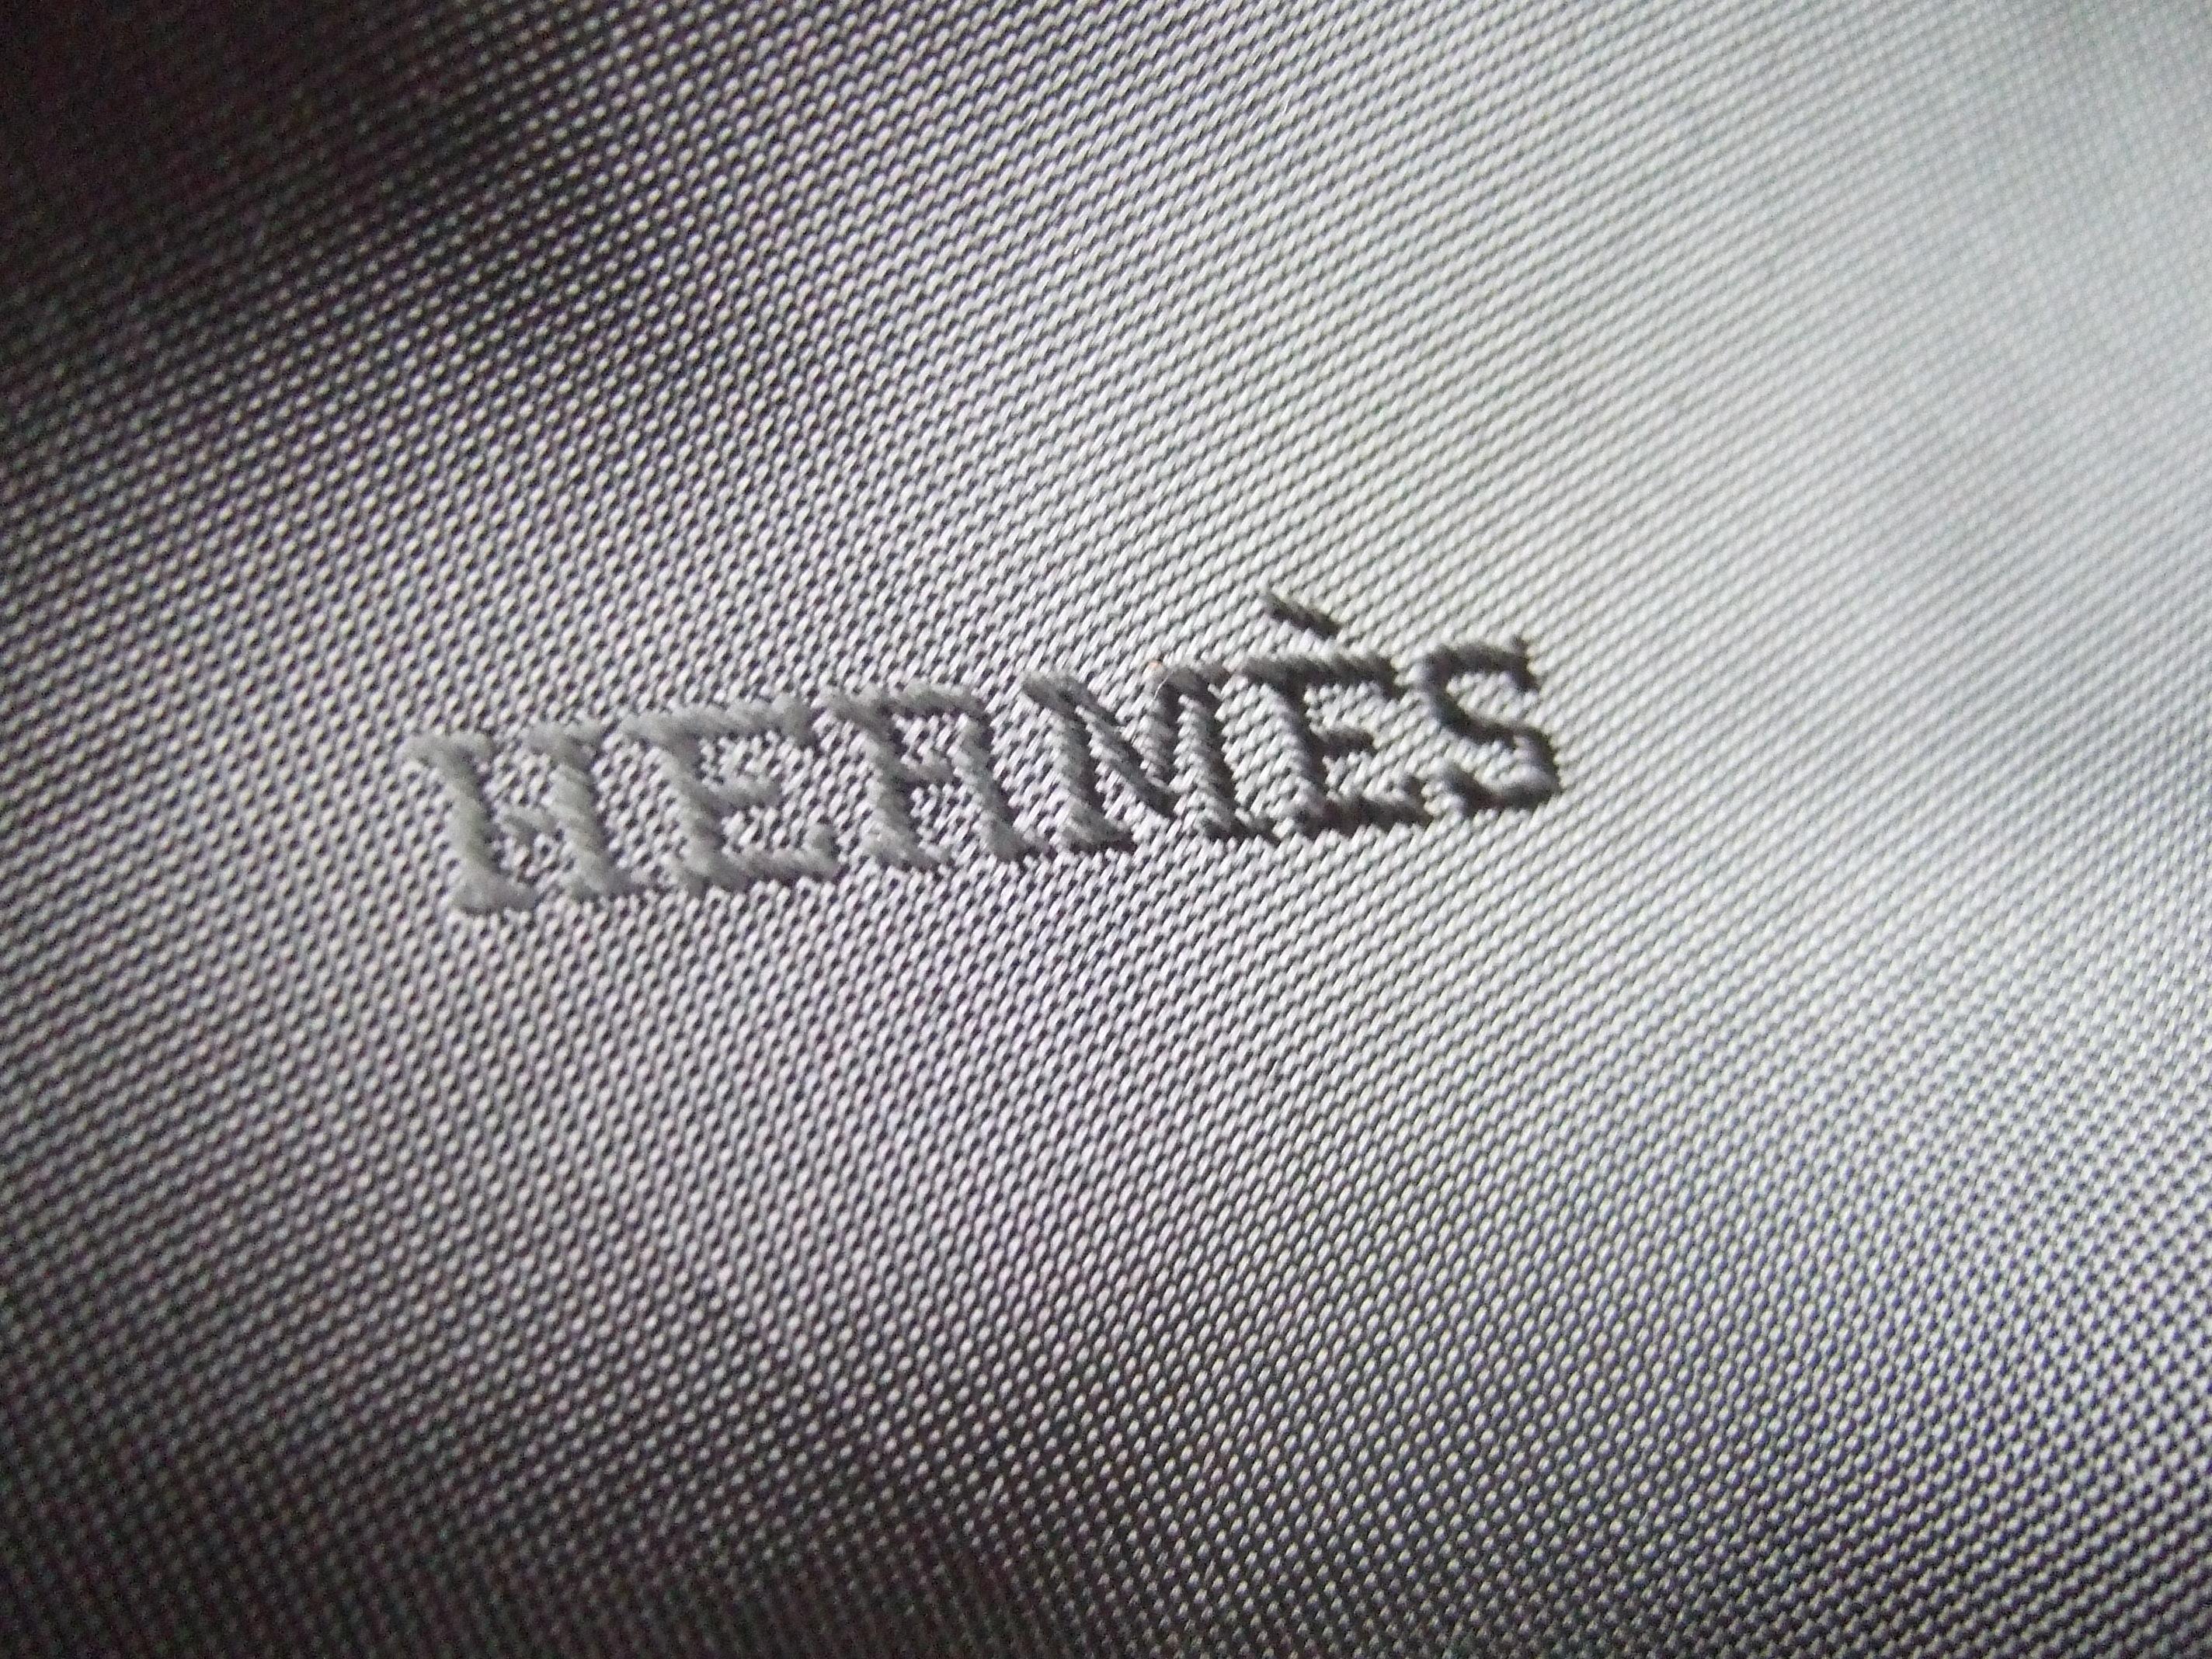 Hermes Men's Buttery Soft Black Lambskin Leather Unisex Coat Size 54 c 21st c  For Sale 8